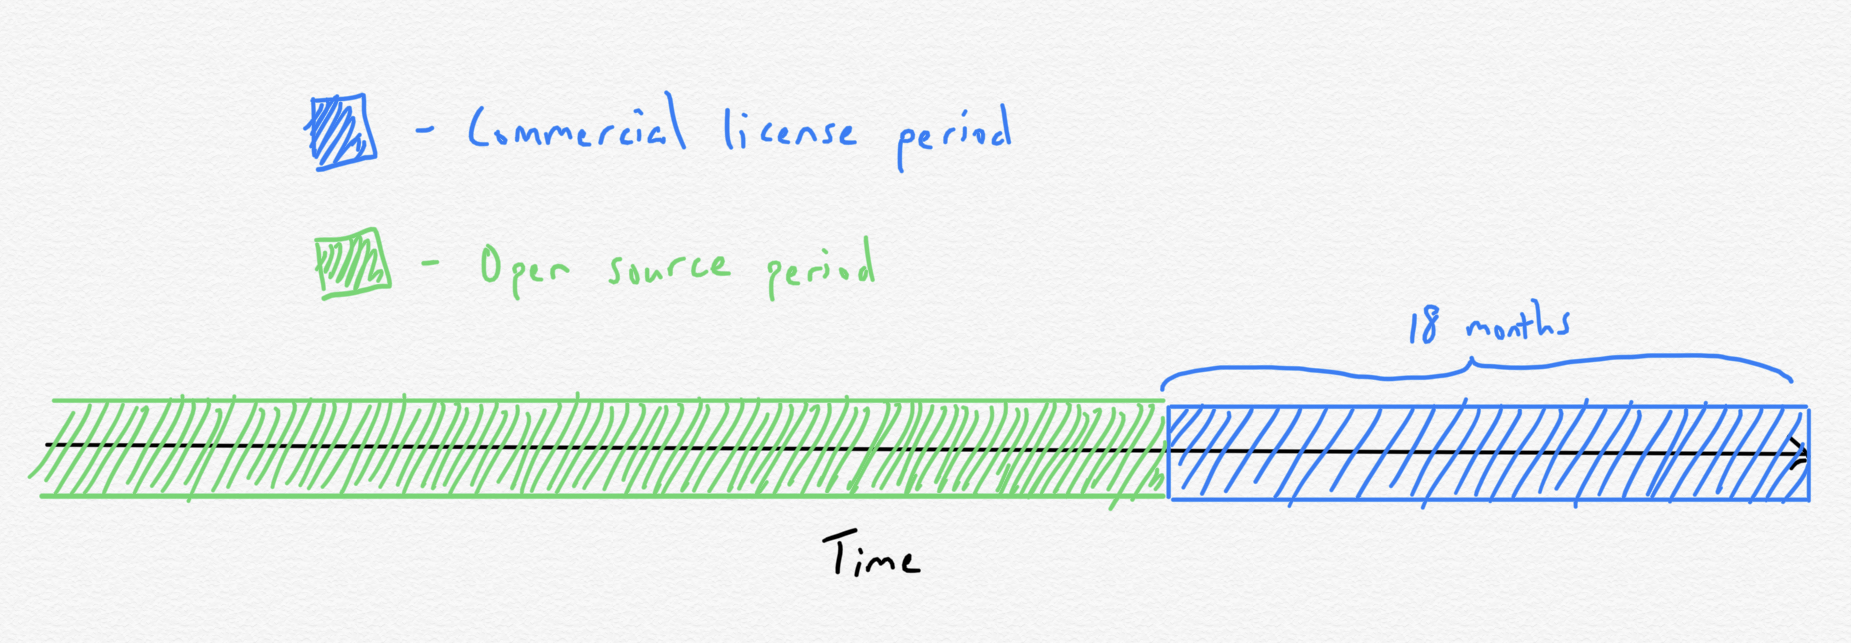 A timeline of OniVim’s licensing scheme